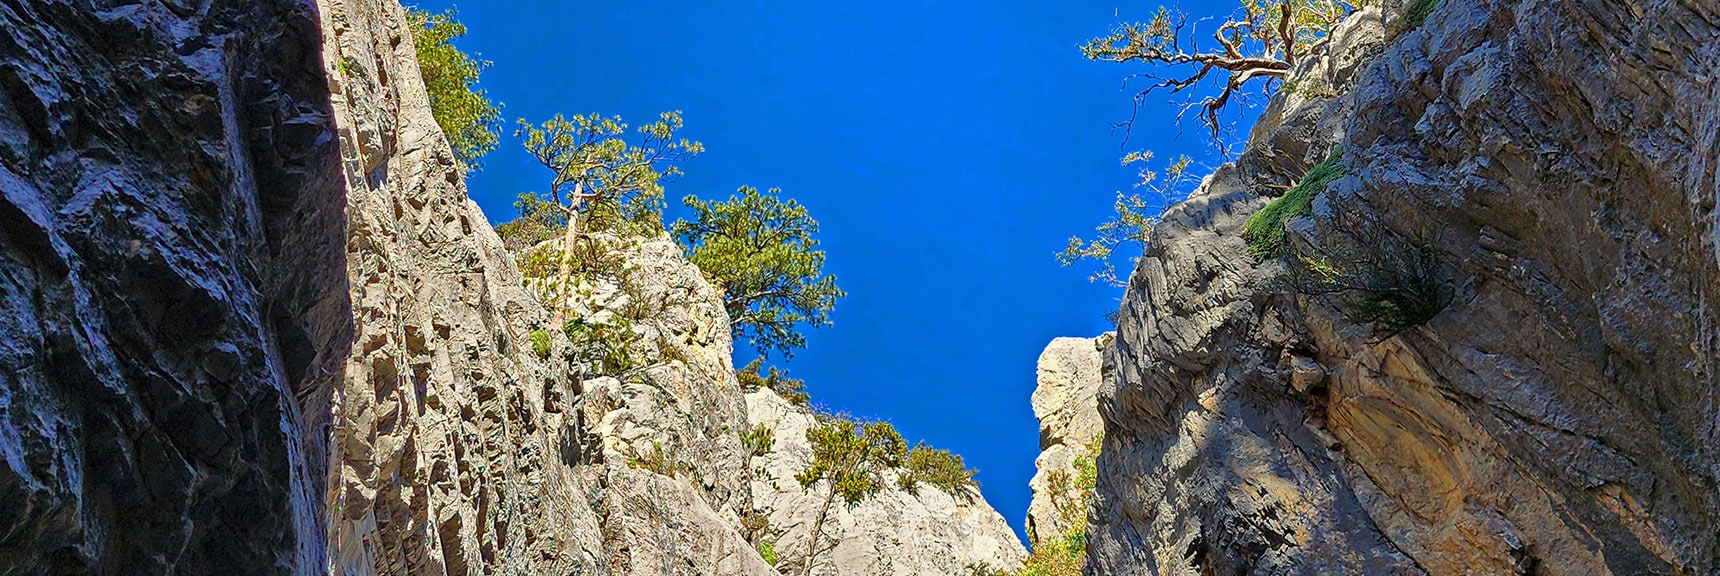 Pines Clinging to Canyon Walls, Creating Bonsai Art. | Fletcher Canyon / Fletcher Peak / Cockscomb Ridge Circuit | Mt. Charleston Wilderness | Spring Mountains, Nevada